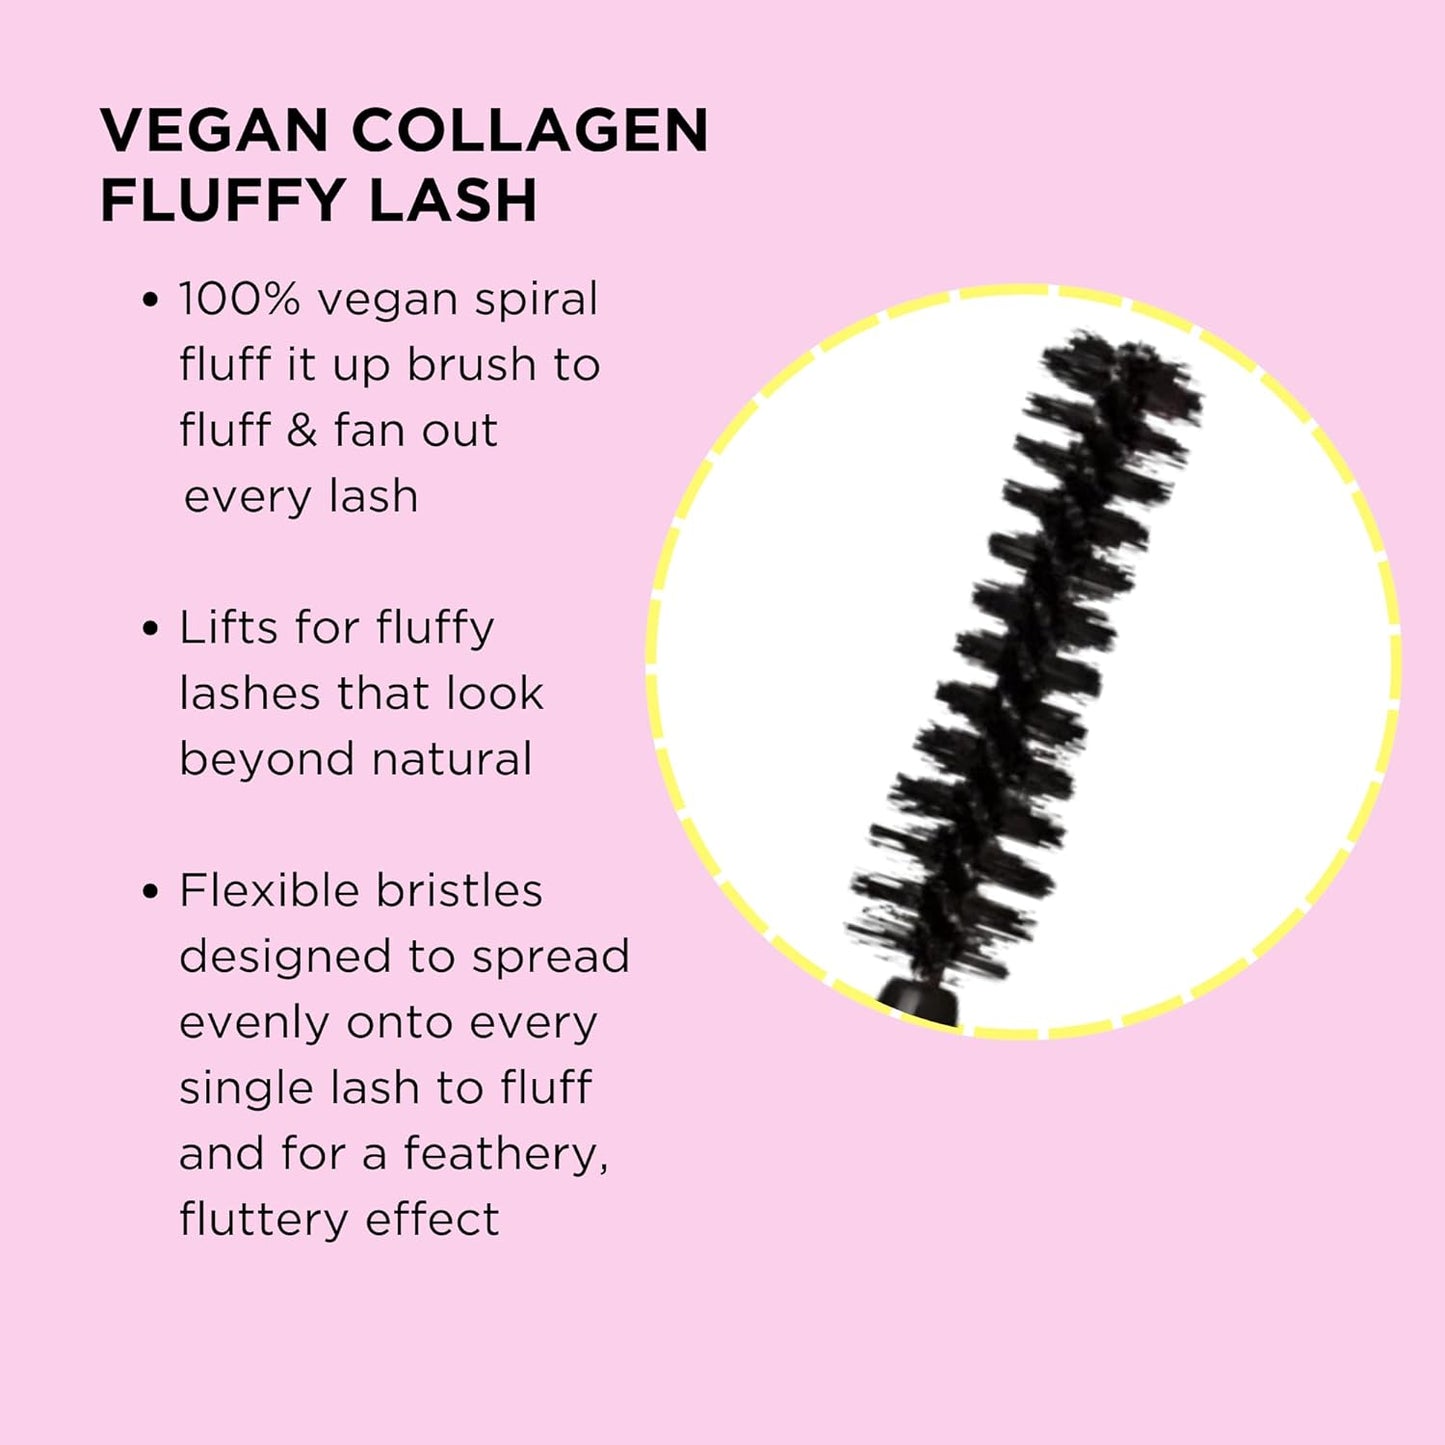 Pacifica Vegan Collagen Fluffy Lash Mascara - Black Mascara Women 0.24 oz